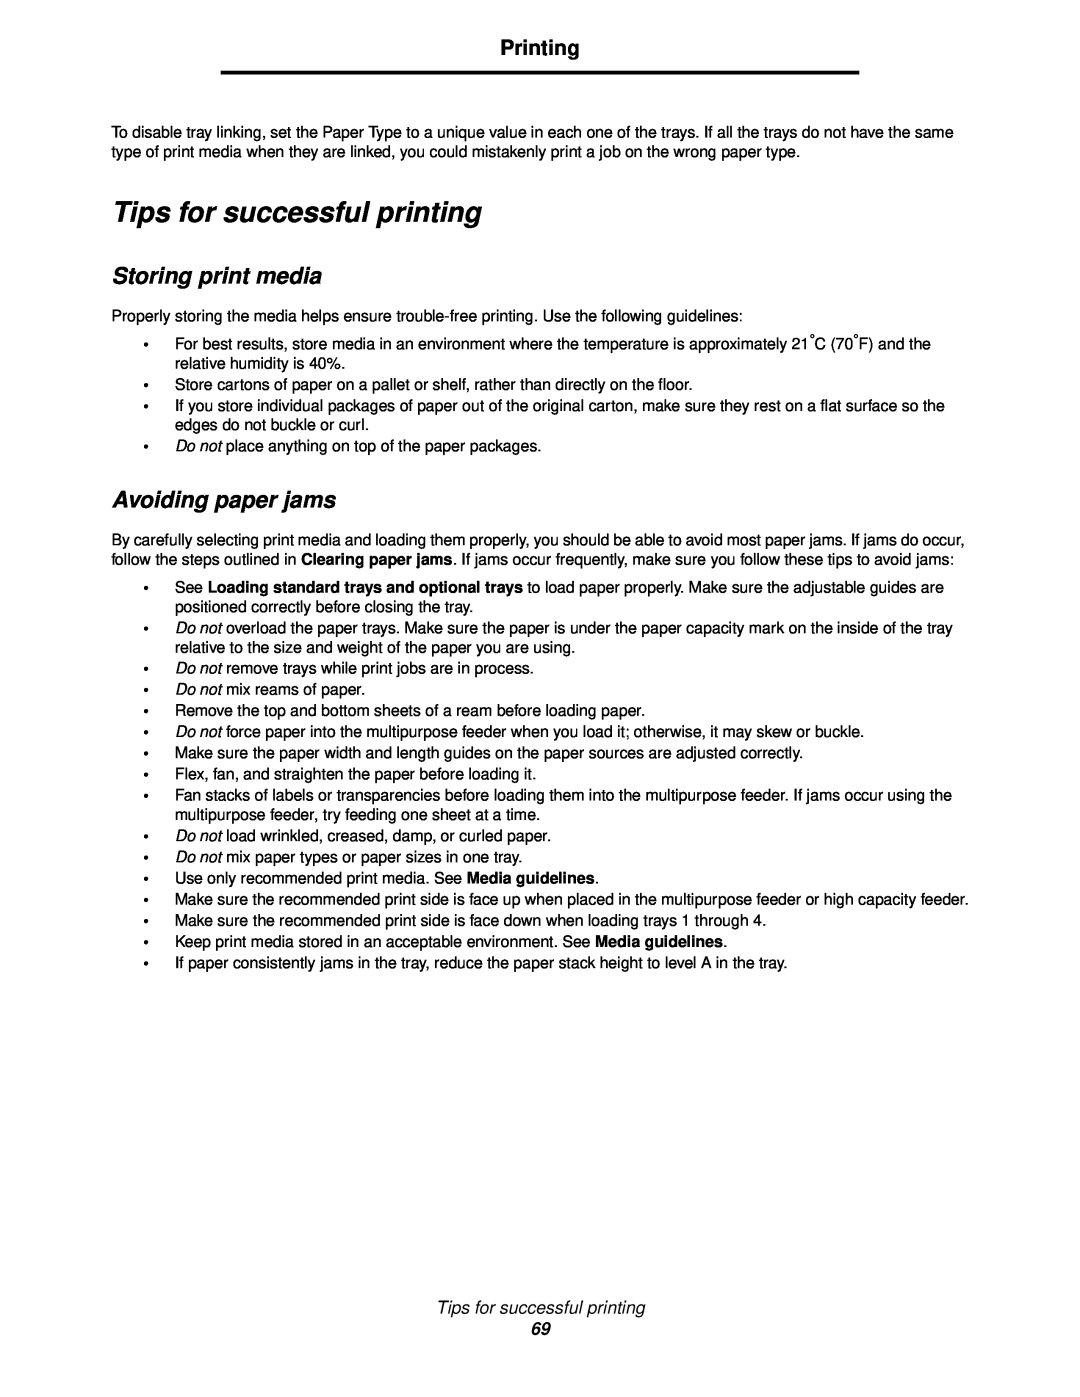 Lexmark 920 manual Tips for successful printing, Storing print media, Avoiding paper jams, Printing 